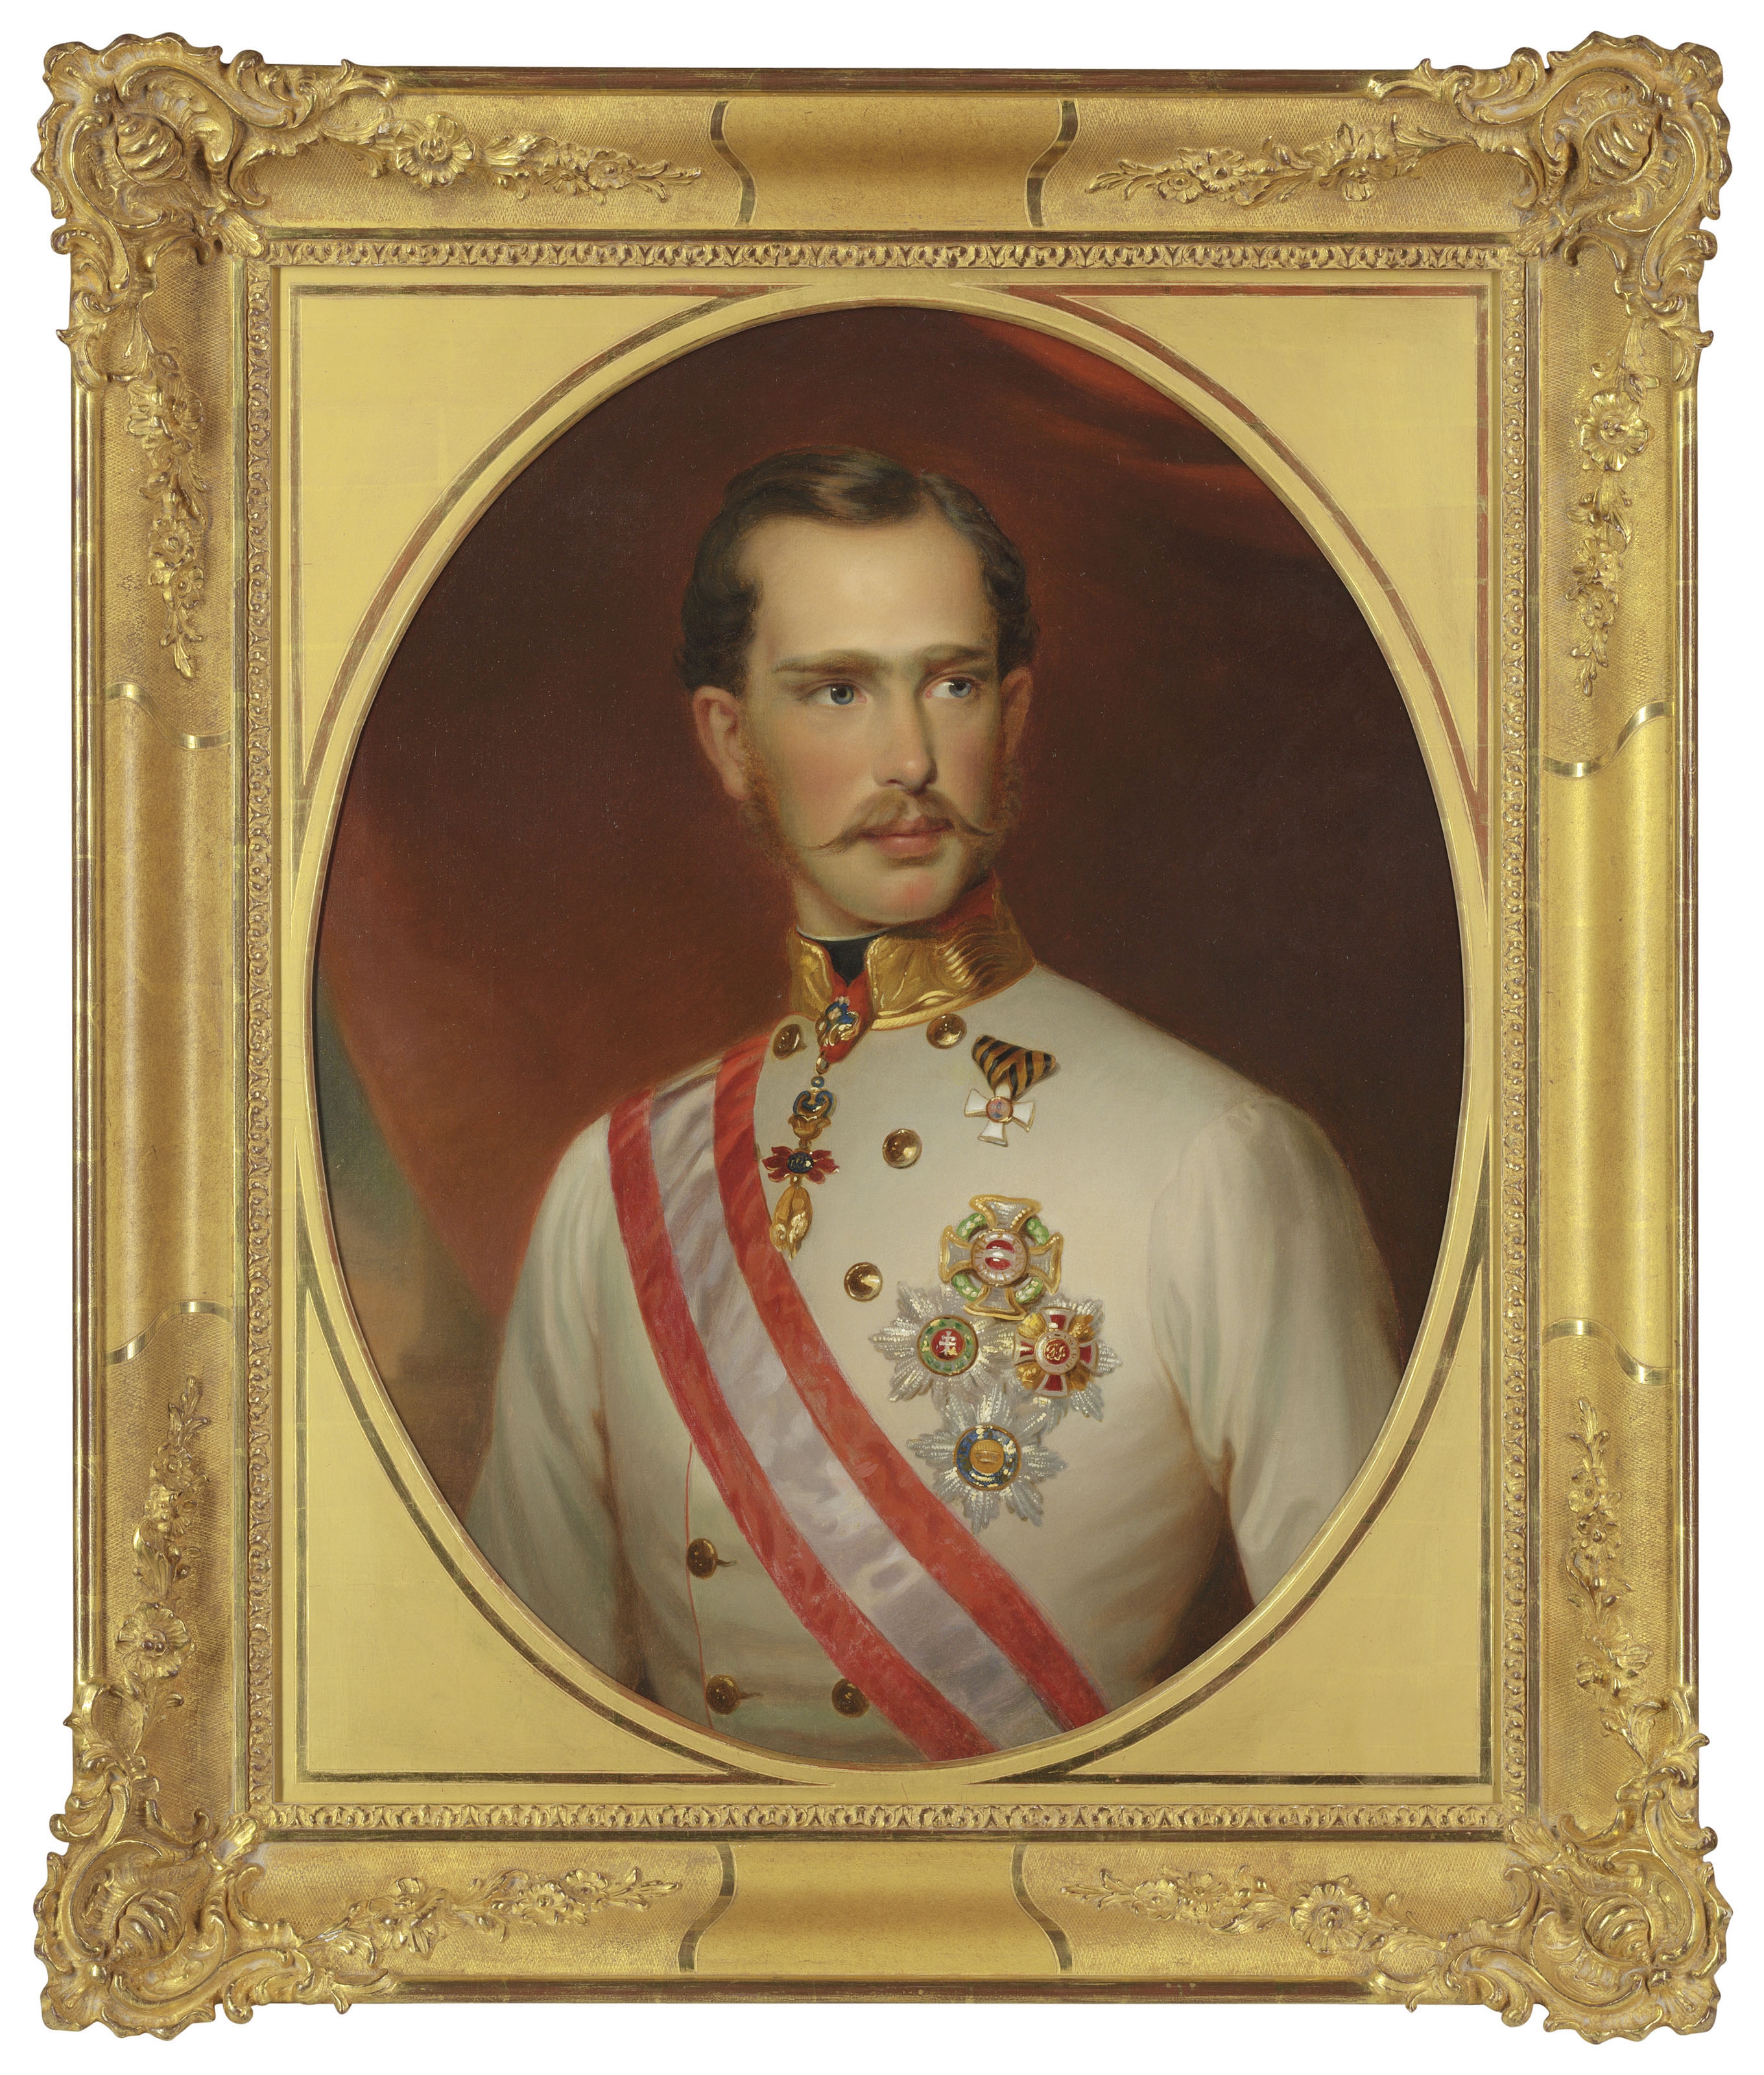 Artwork by Franz Xaver Winterhalter, Portrait of Emperor Franz Joseph I of Austria (1830-1916), half length, Made of oil on canvas